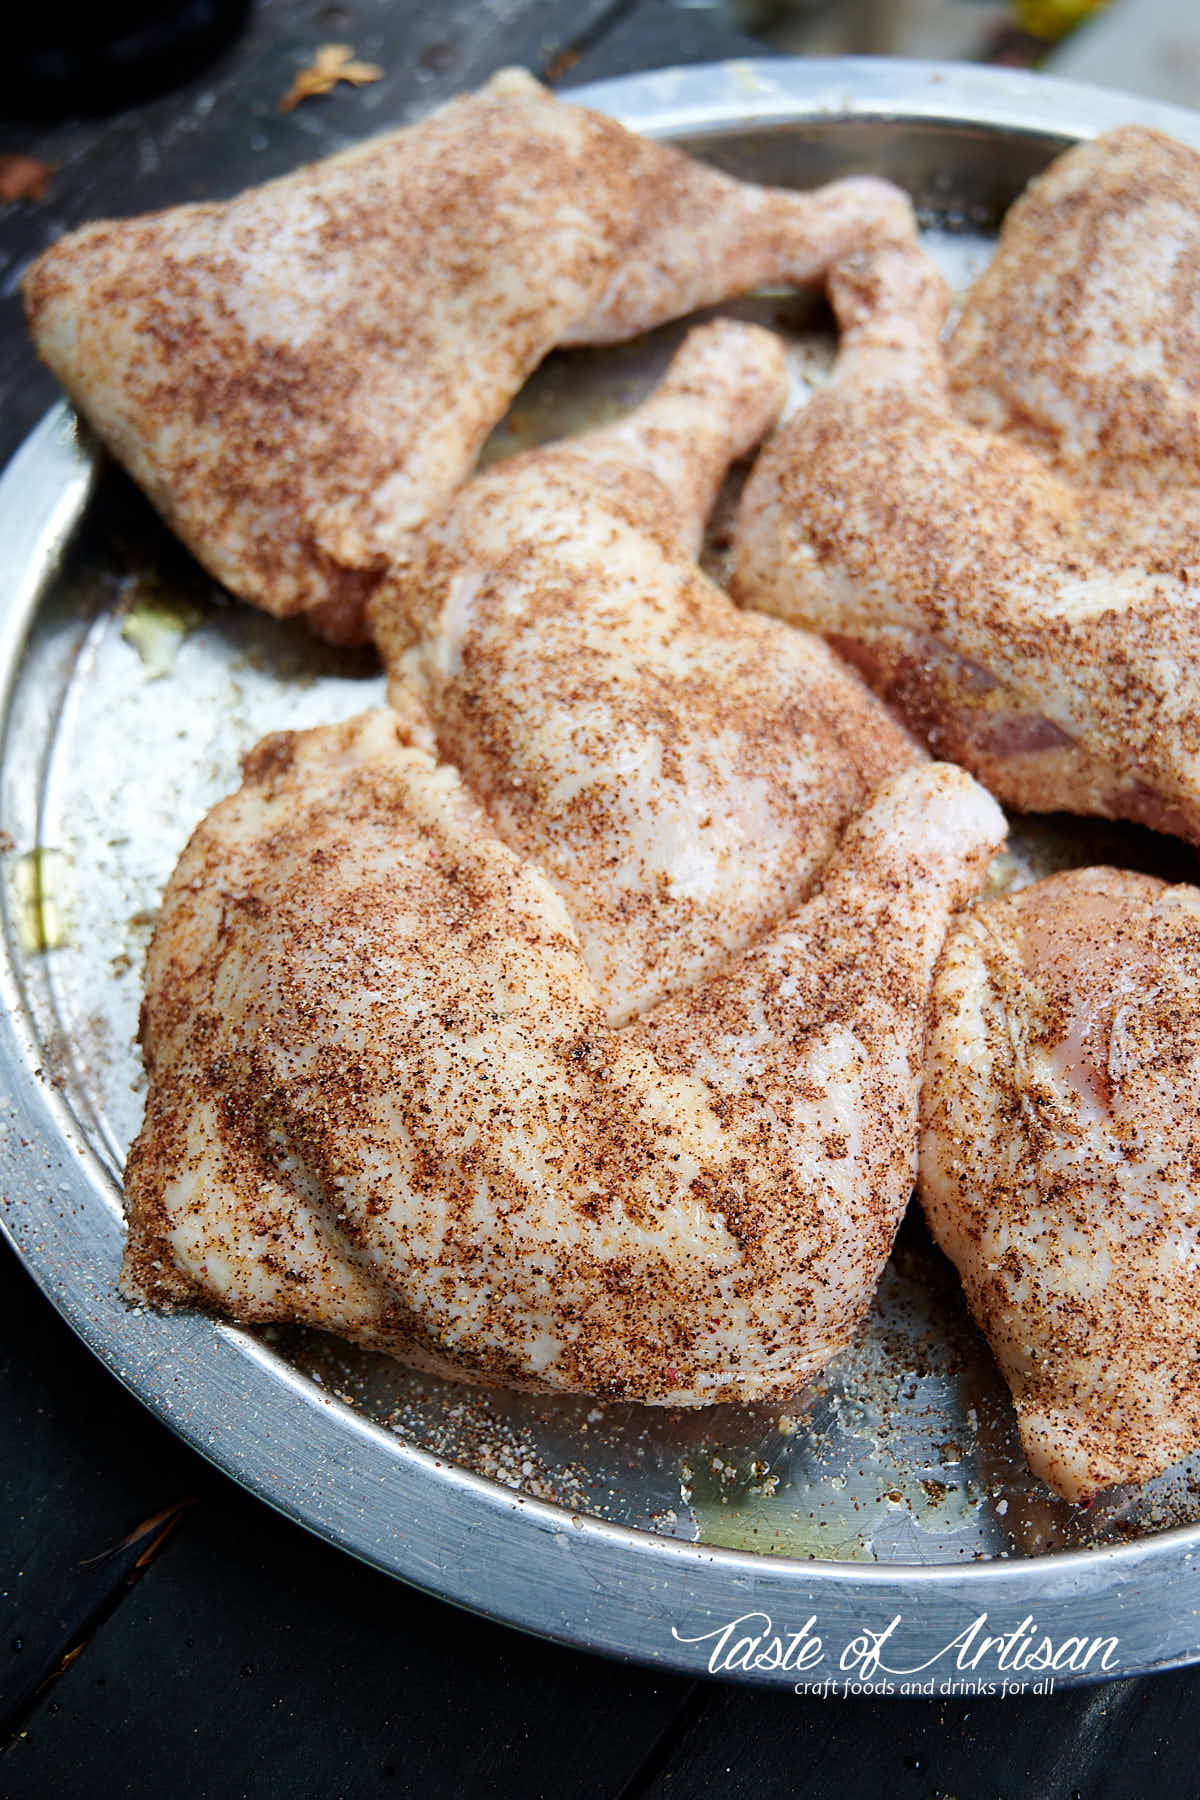 Raw chicken leg quarters sprinkled with seasonings.